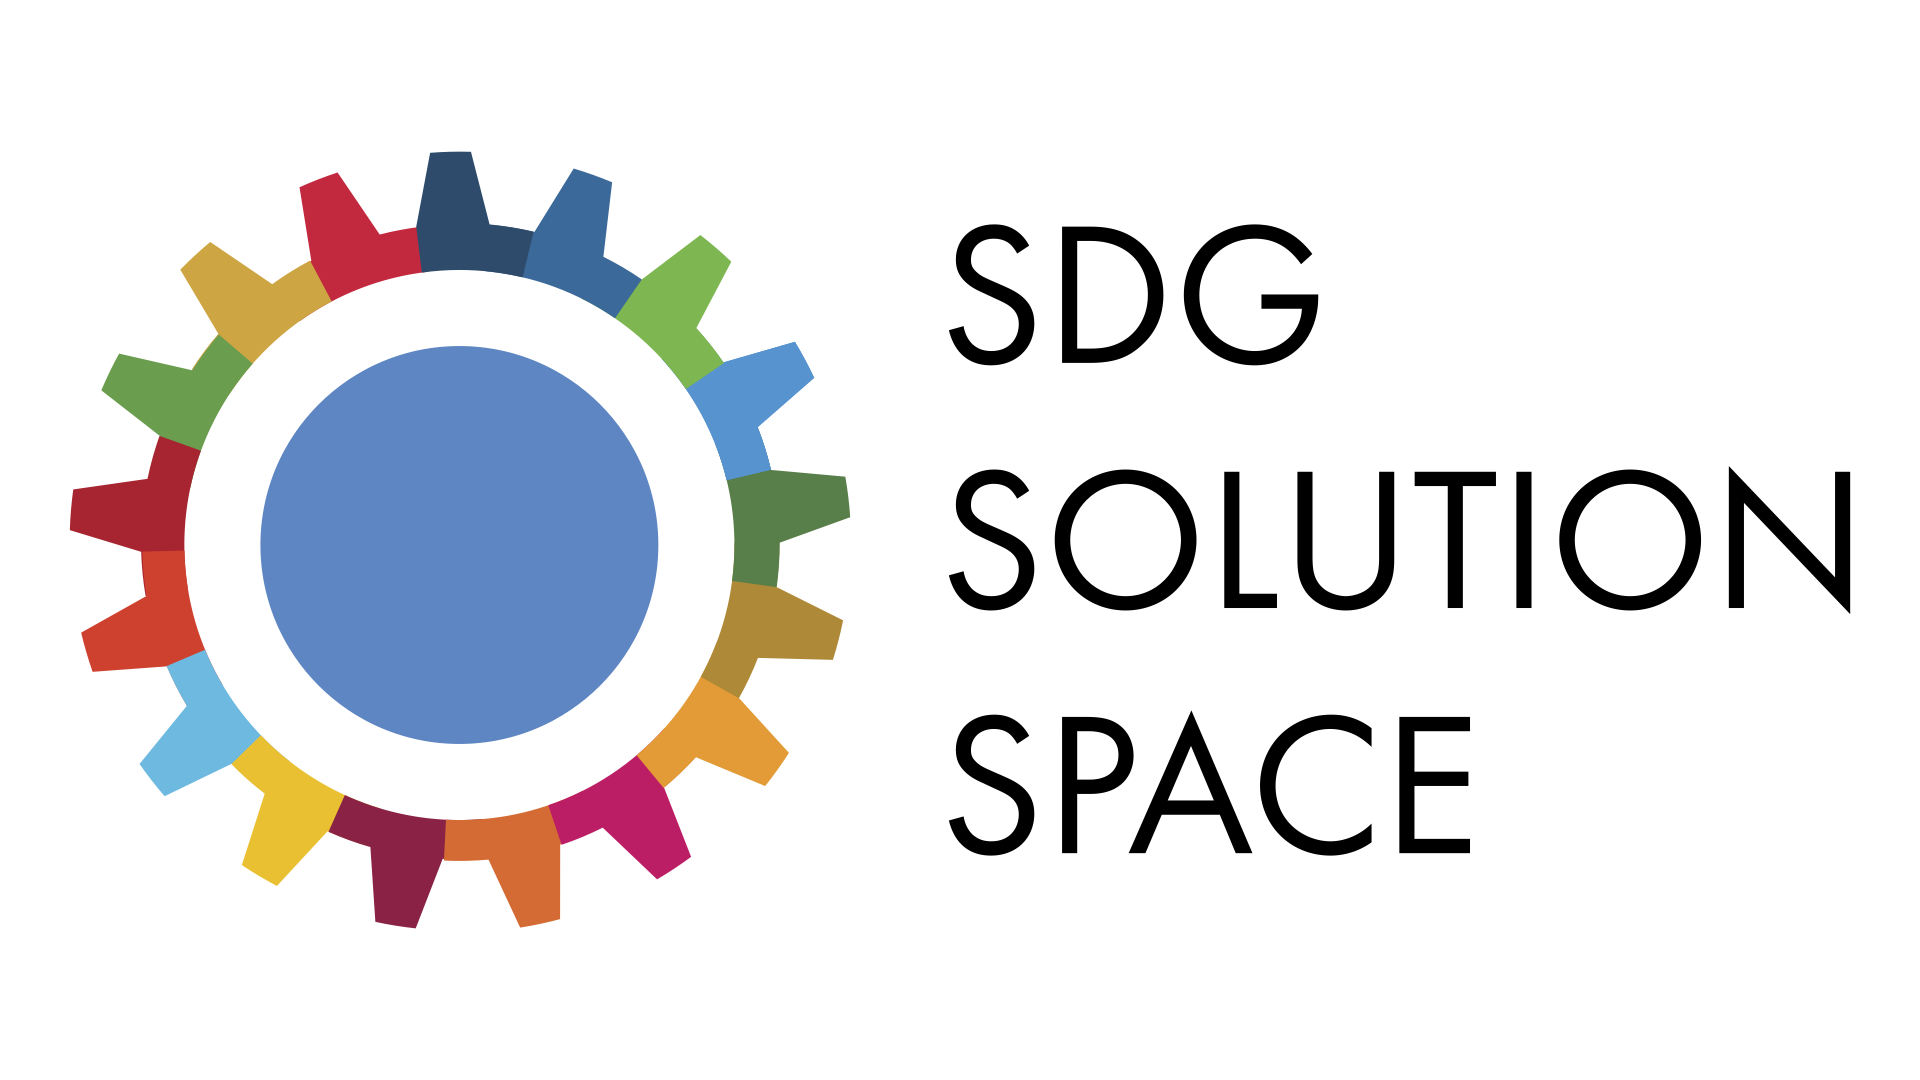 SDG Solution Space